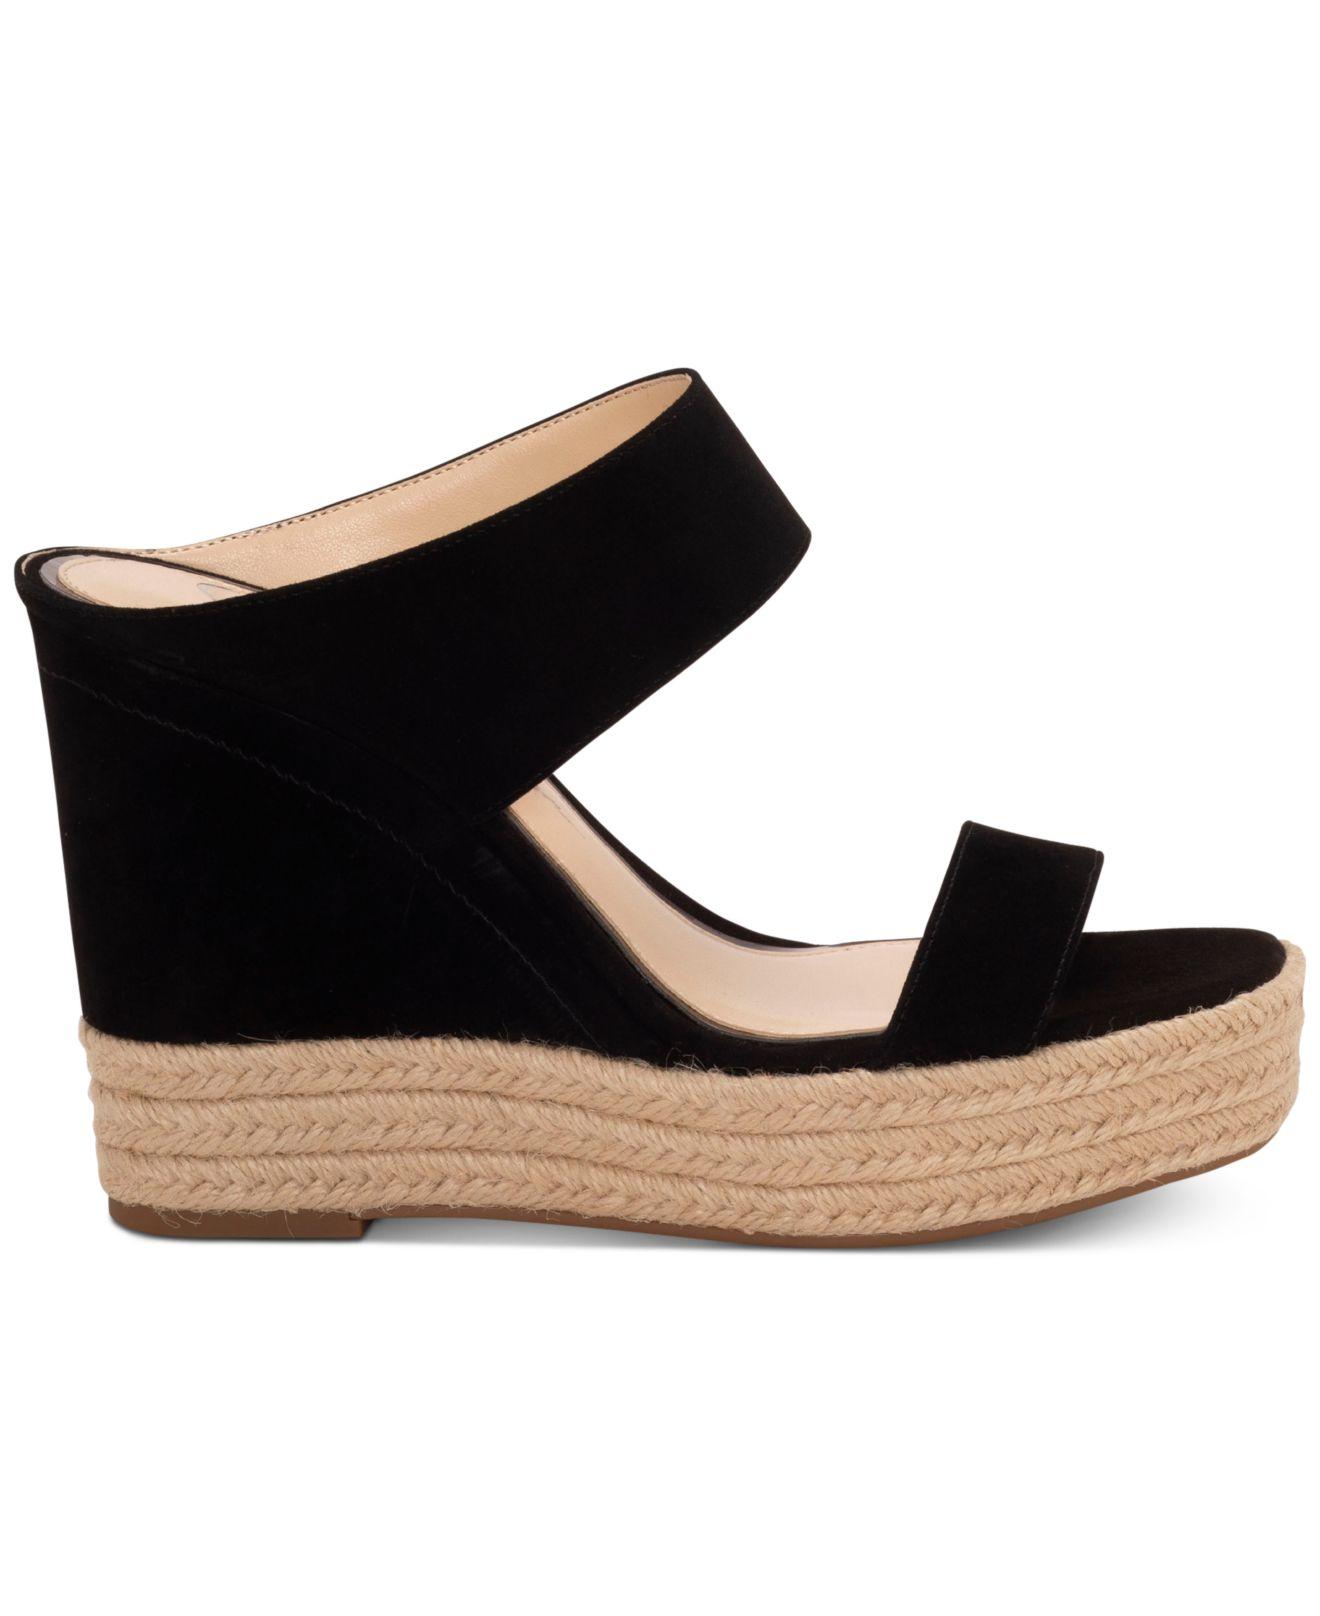 Jessica Simpson Siera Wedge Sandals in Black | Lyst